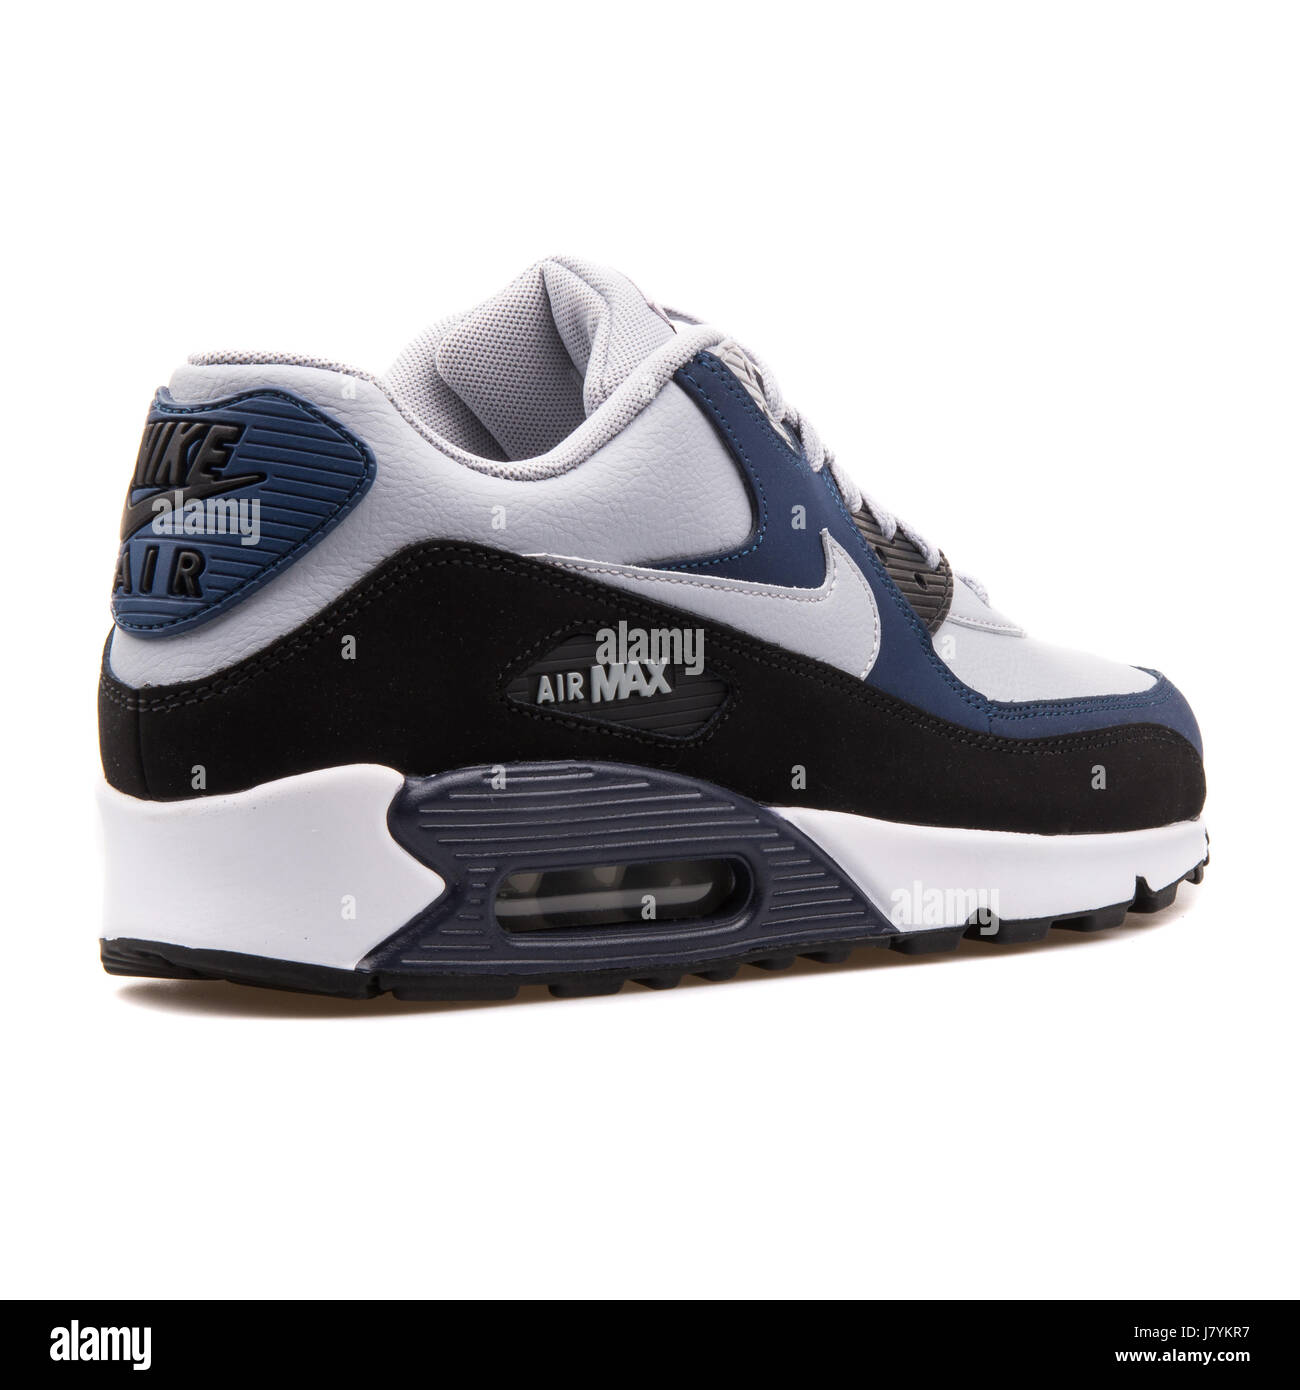 Nike Air 90 LTR azul hombres zapatillas deportivas - 652980-011 Fotografía stock - Alamy